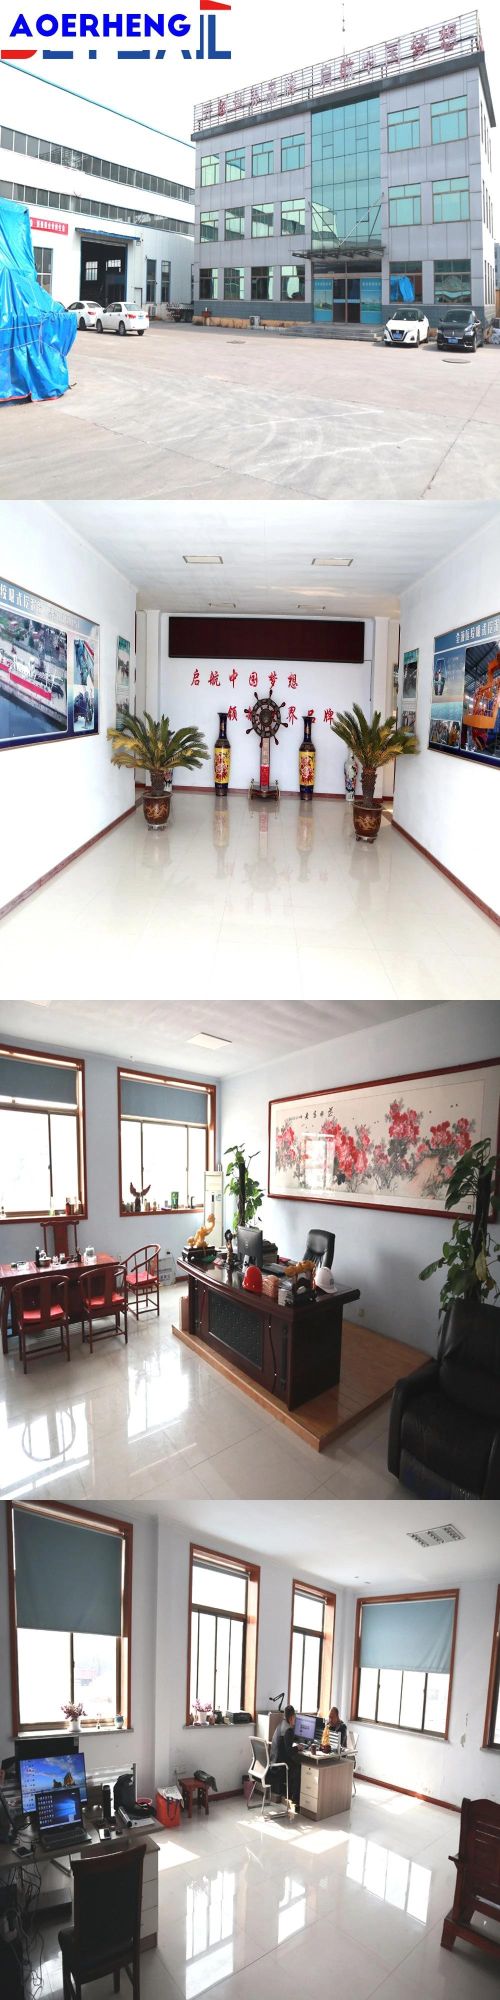 Shijiazhuang Sand Pump Cutter Suction Sand Dredging Ship for Sale